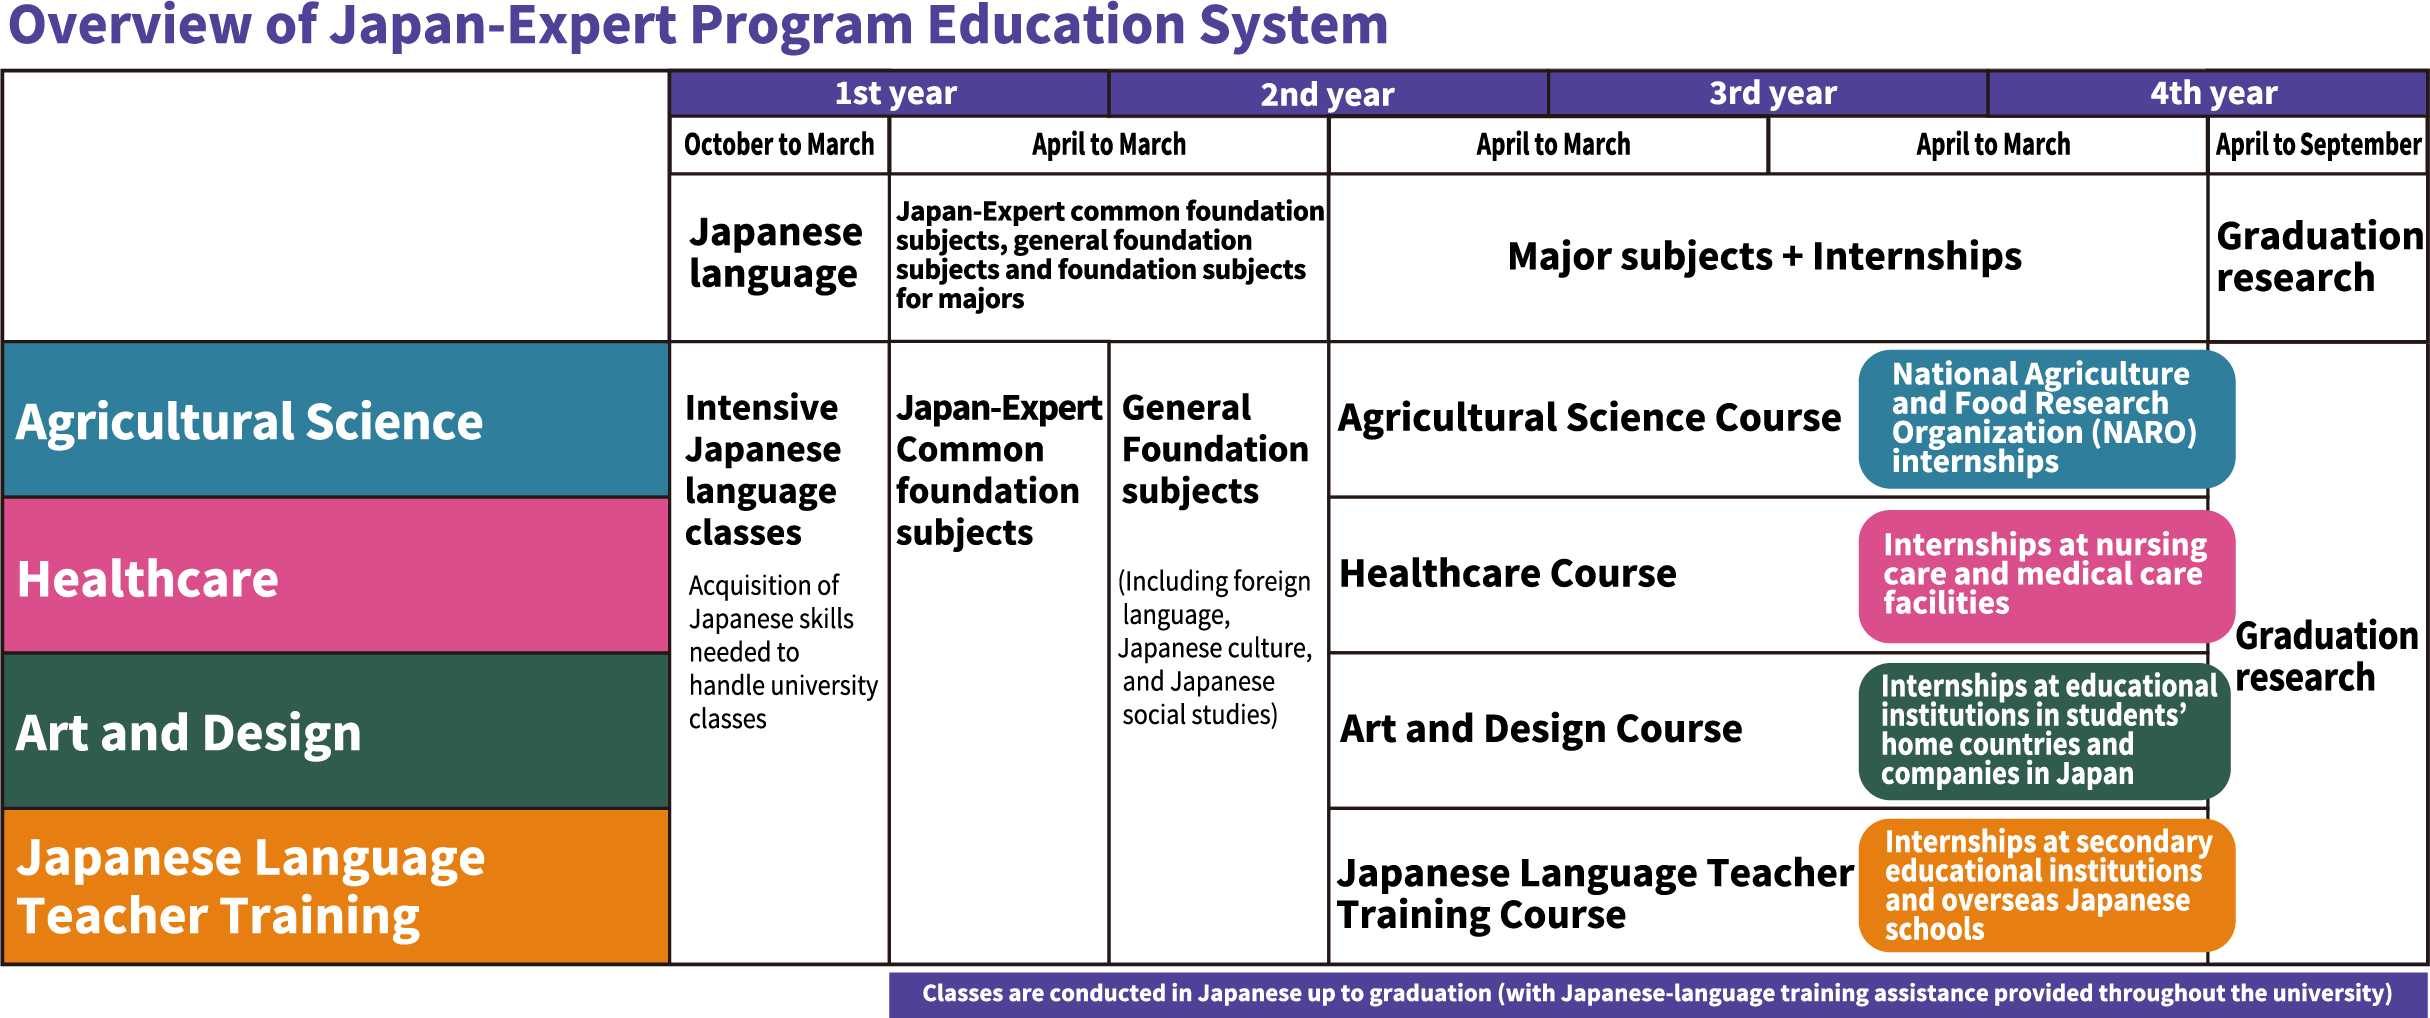 Overview of Japan Expert Program Education System